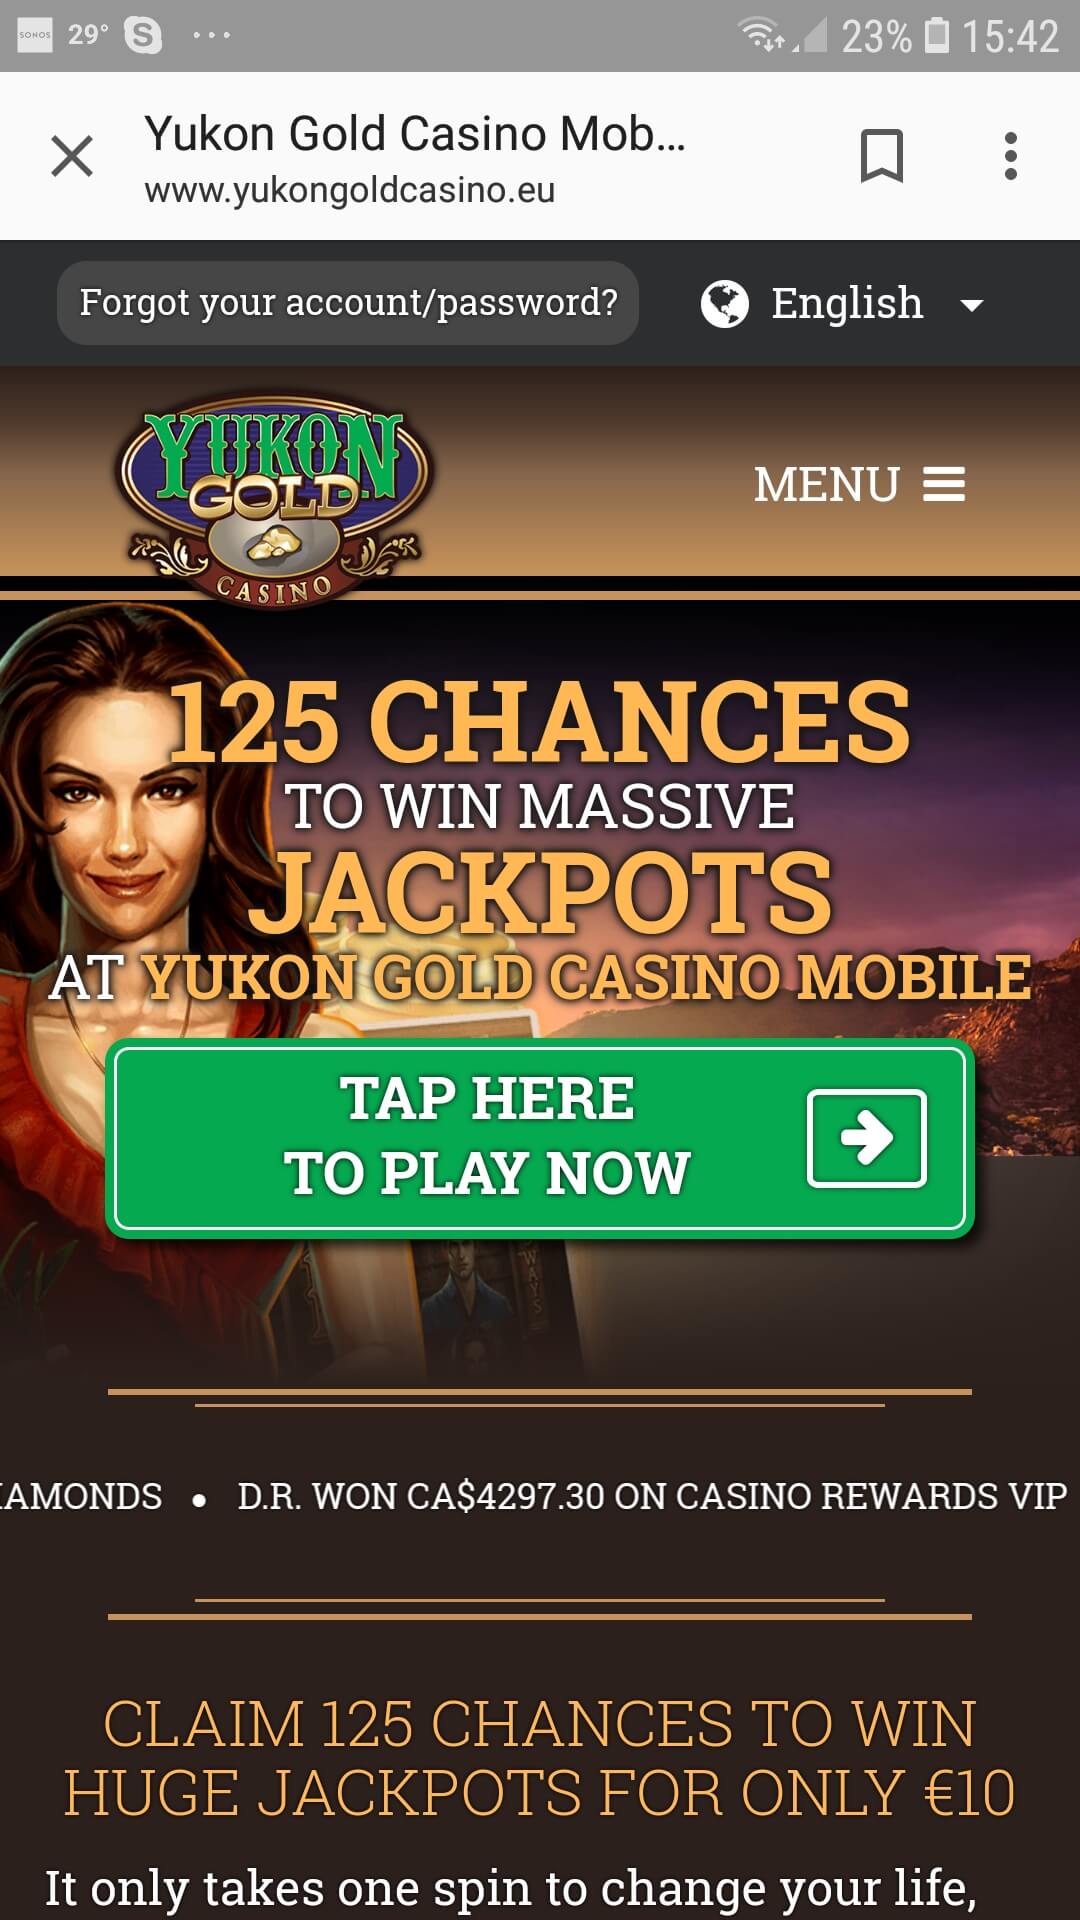 Casino online, free bonus no deposit